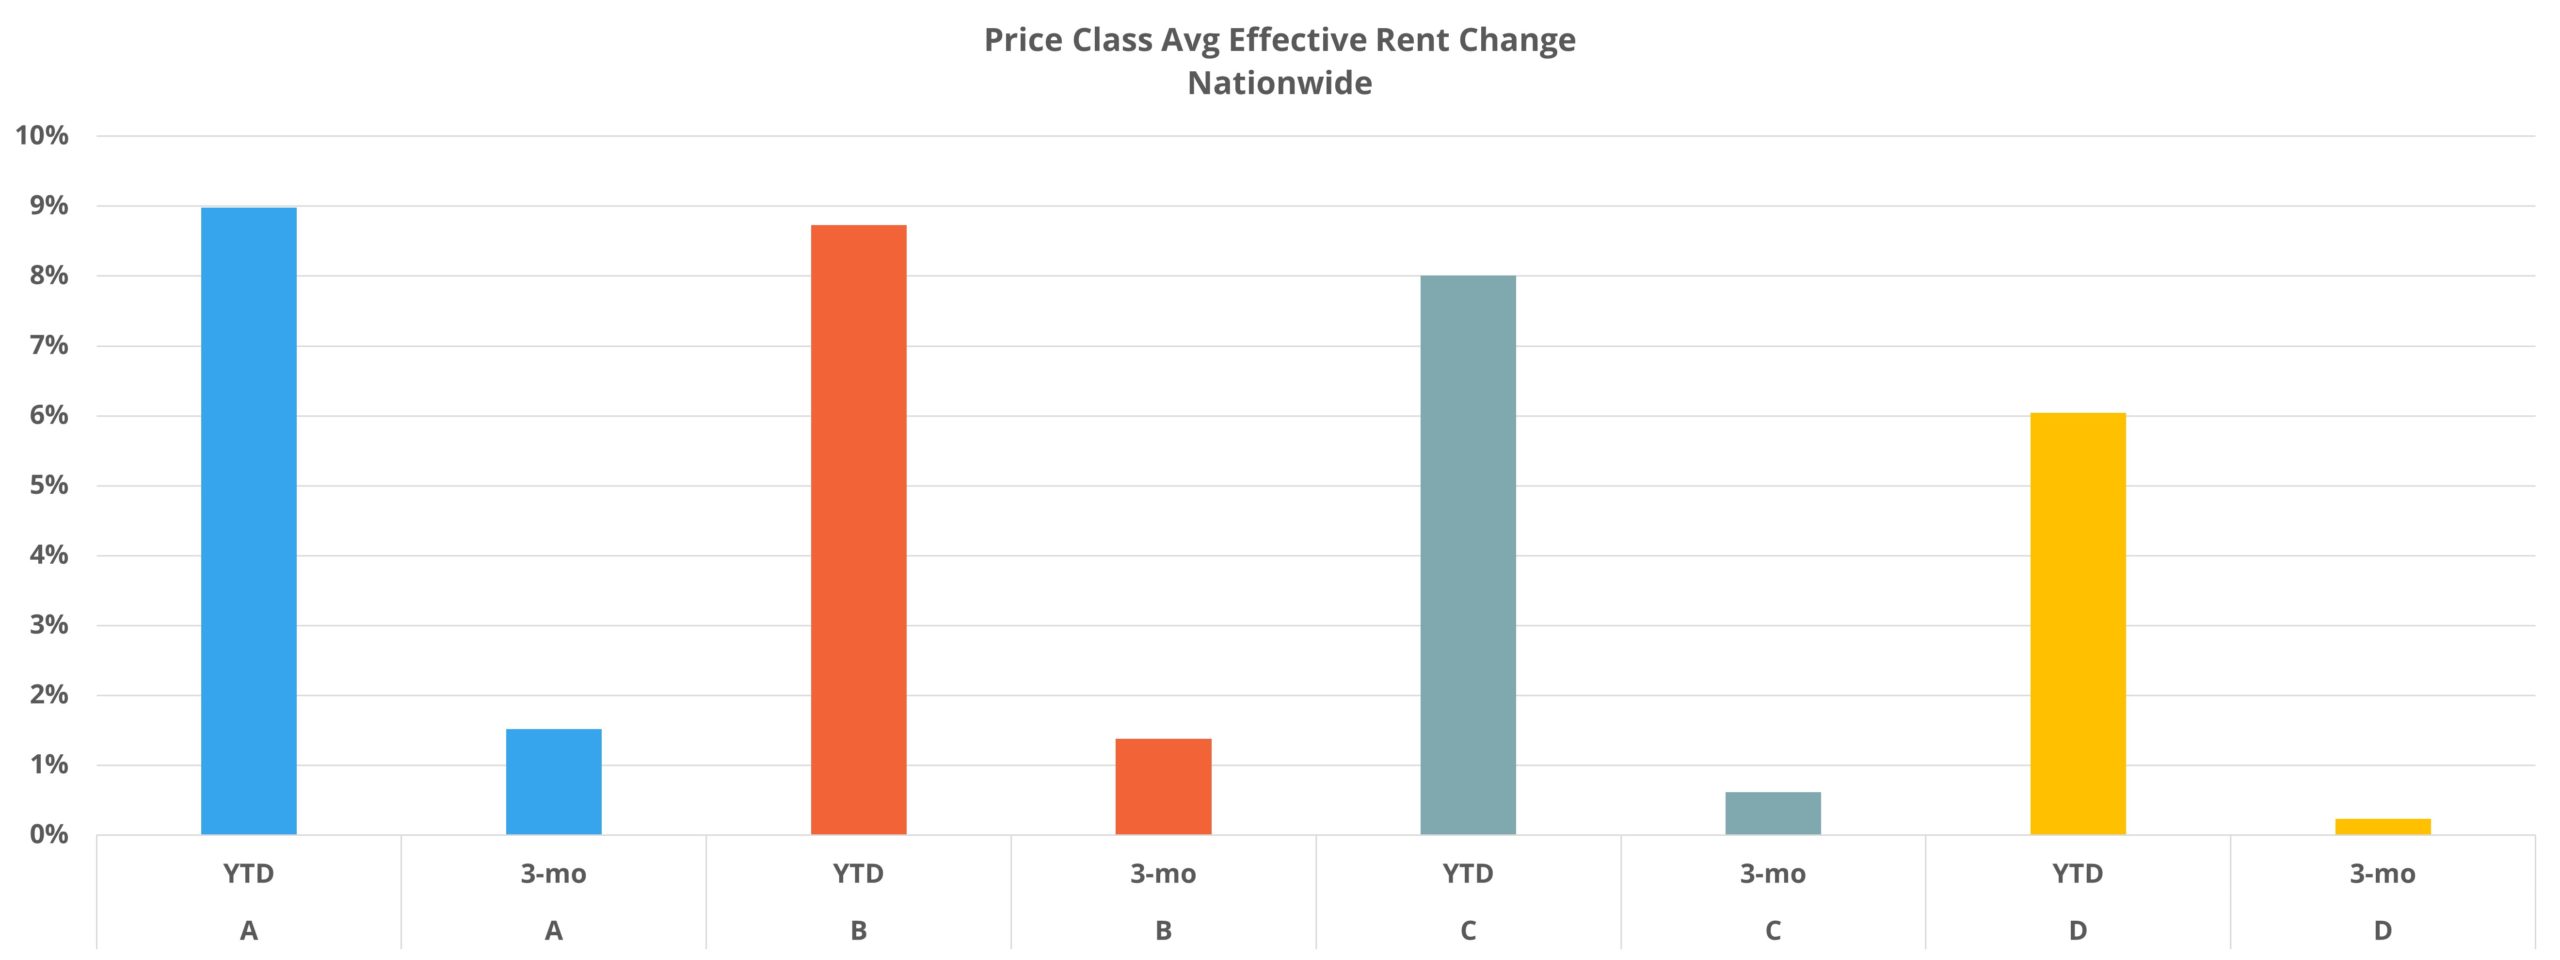 Price Class Avg Effective Rent Change